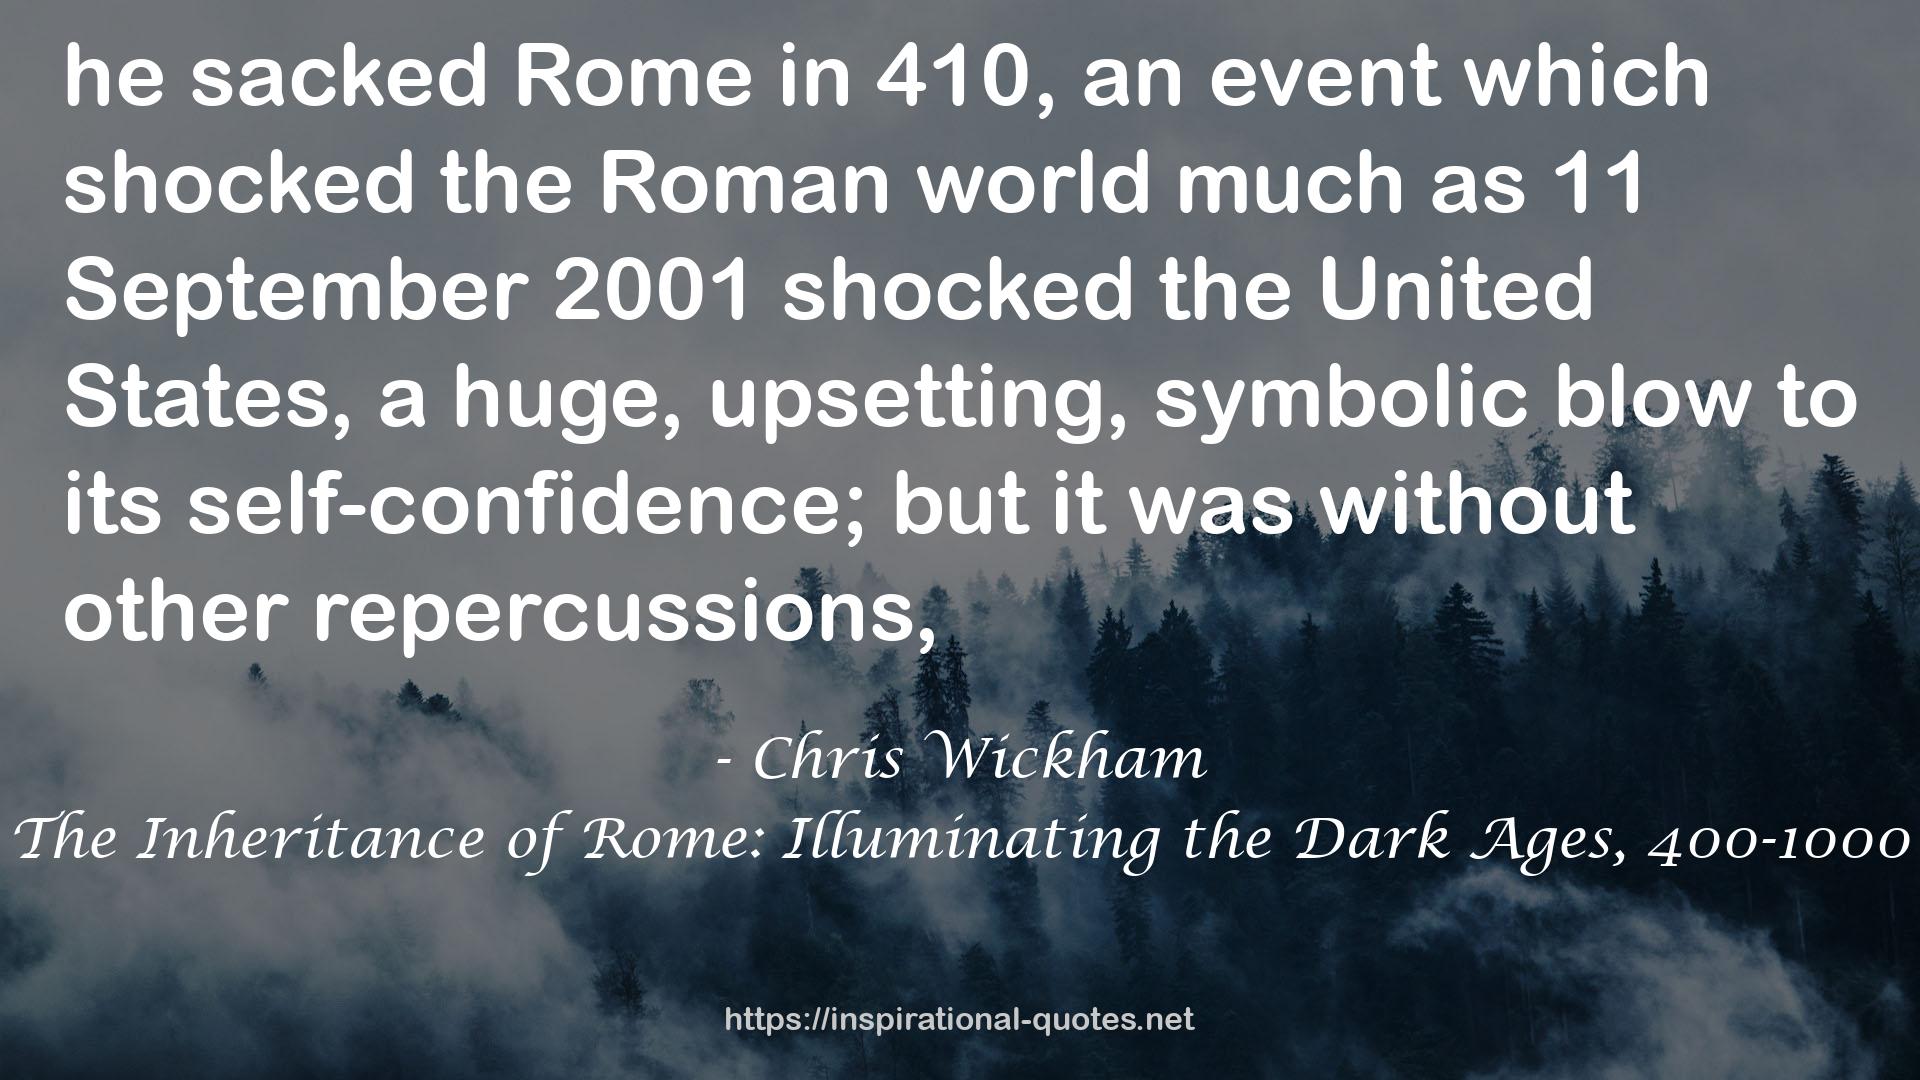 The Inheritance of Rome: Illuminating the Dark Ages, 400-1000 QUOTES